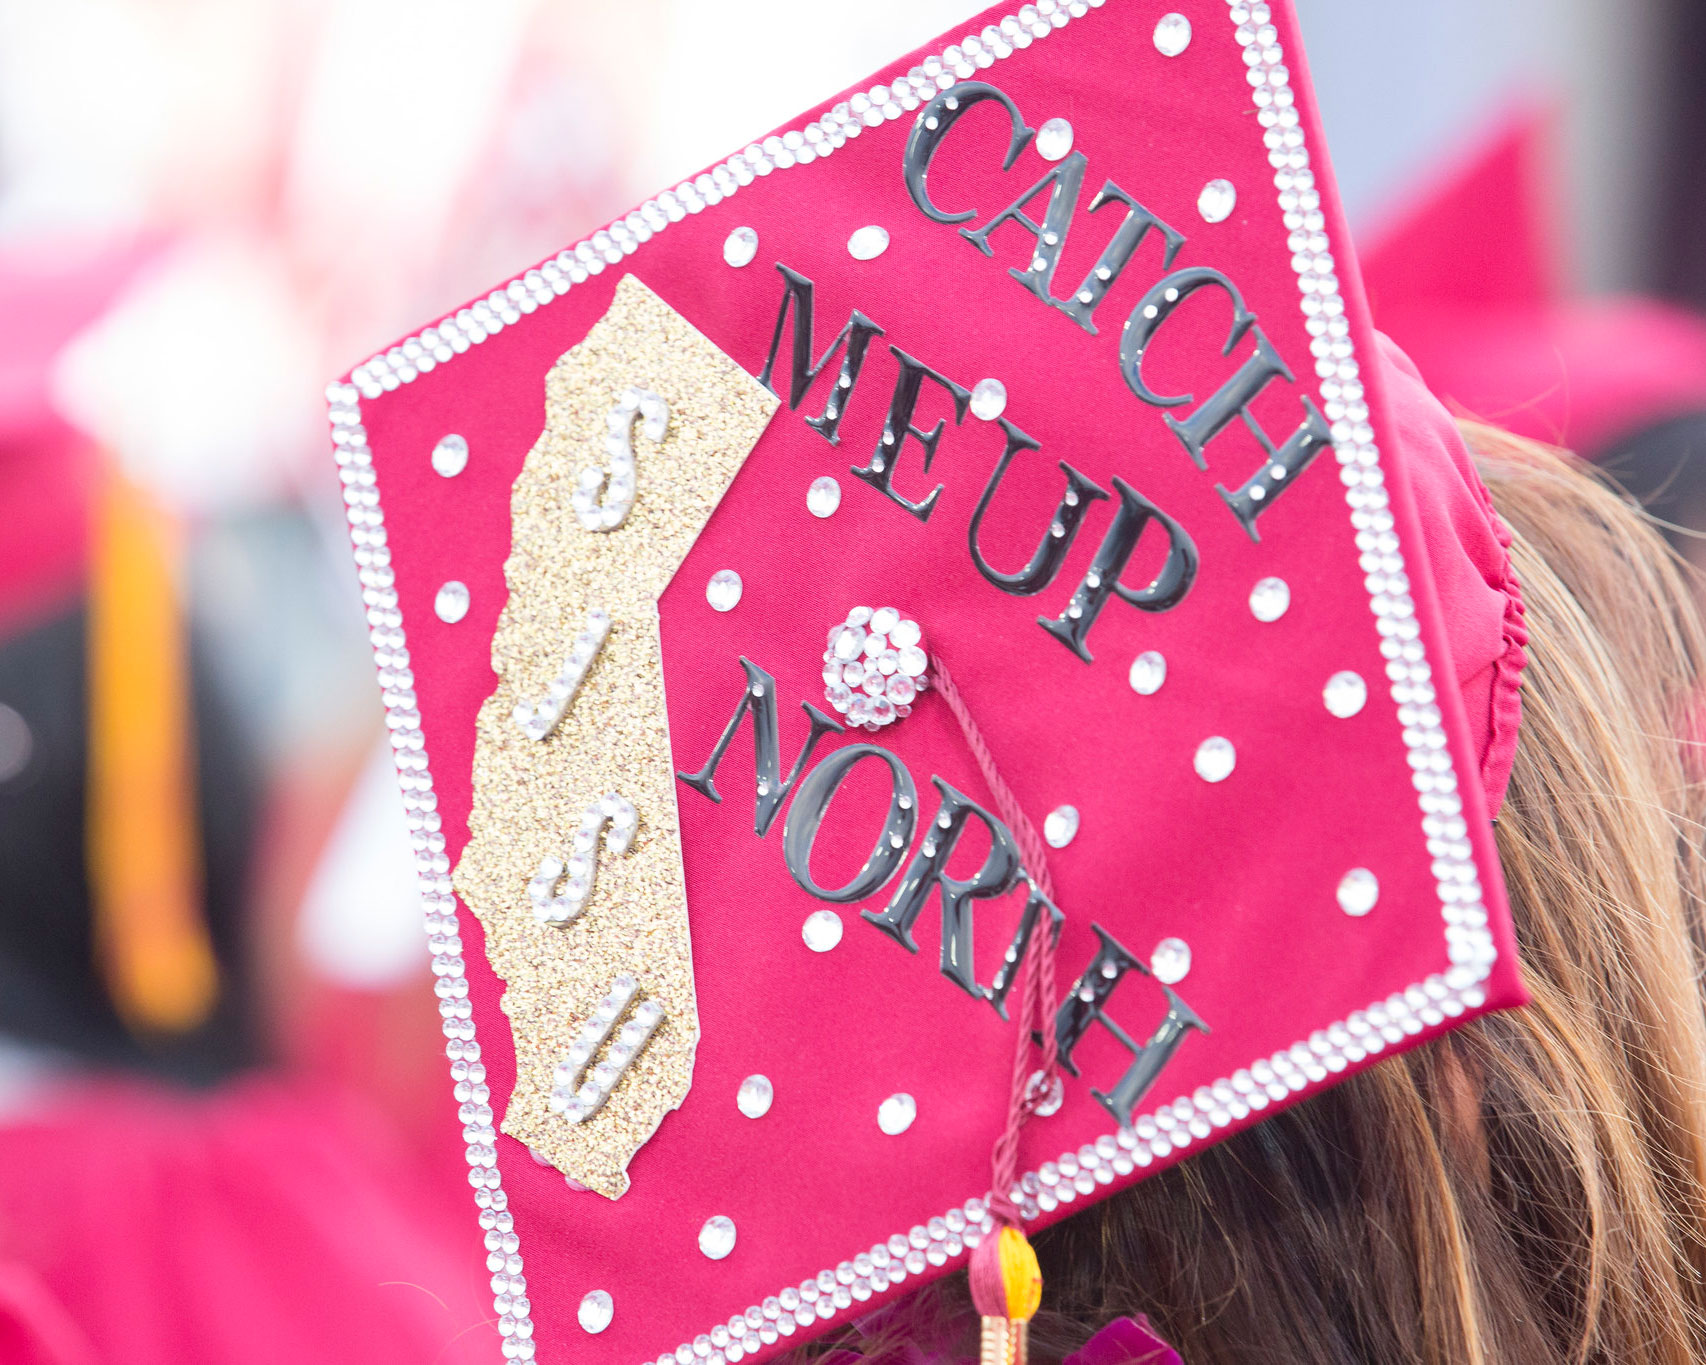 Student's graduation cap reads "Catch me up north, SJSU"